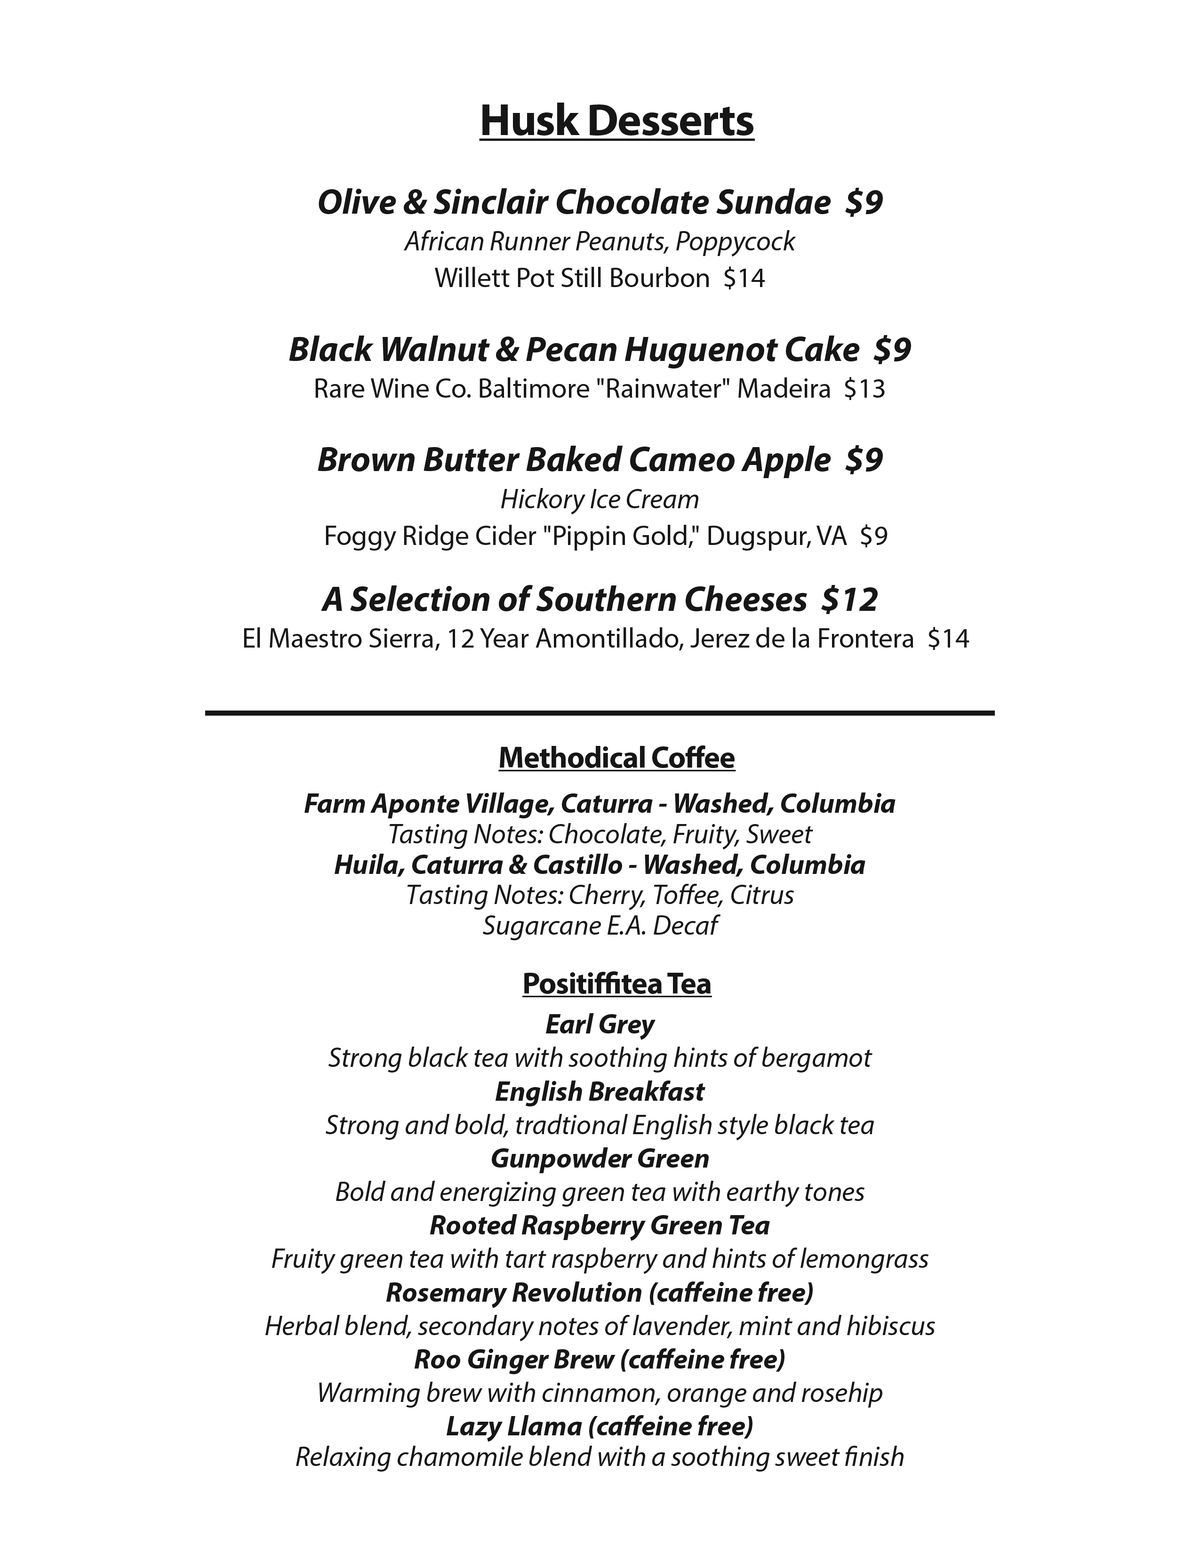 Husk Greenville Dessert 11.28.17.pdf